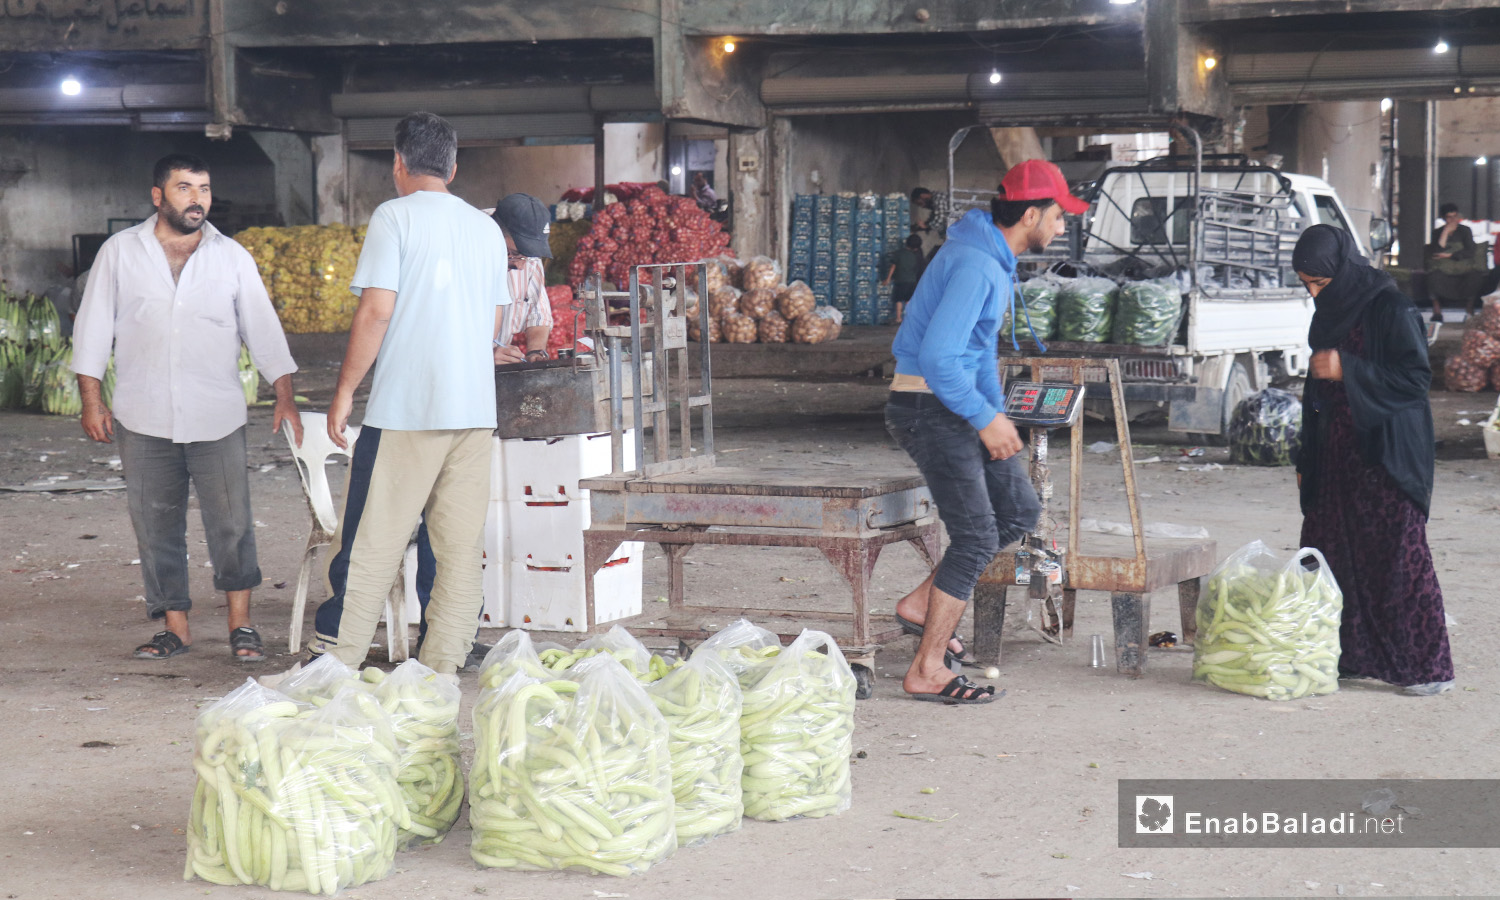 Workers in al-Hal street market in al-Raqqa city - September 2020 (Enab Baladi - Abdul Aziz al-Saleh)